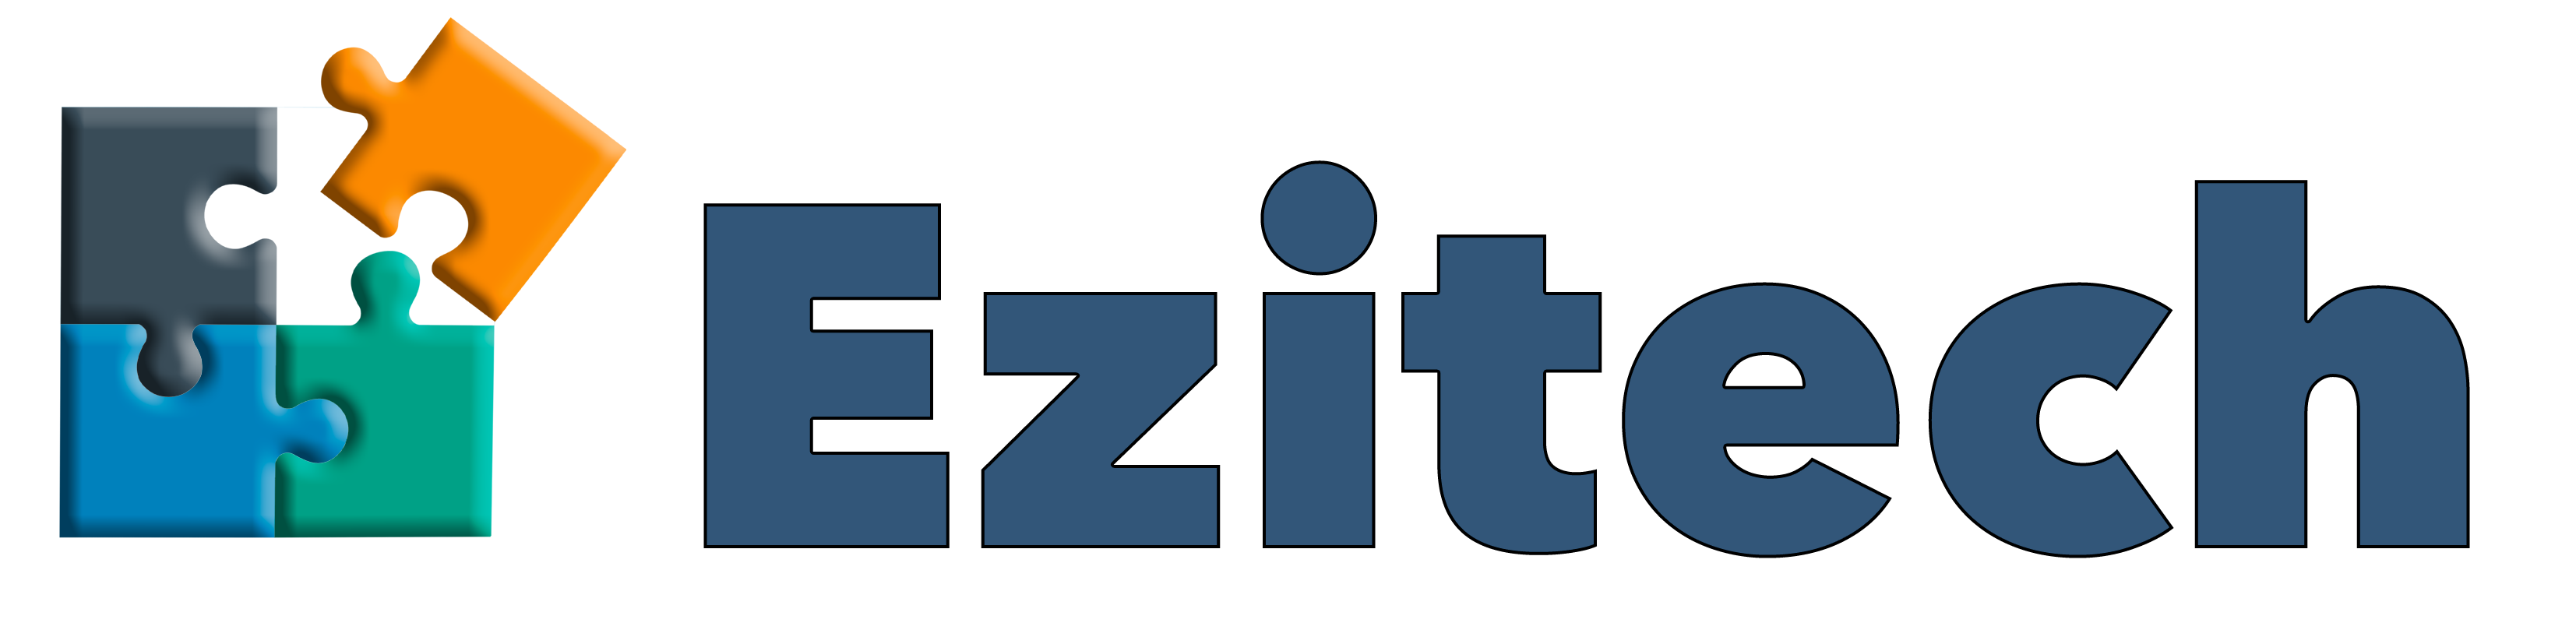 Ezitech logo